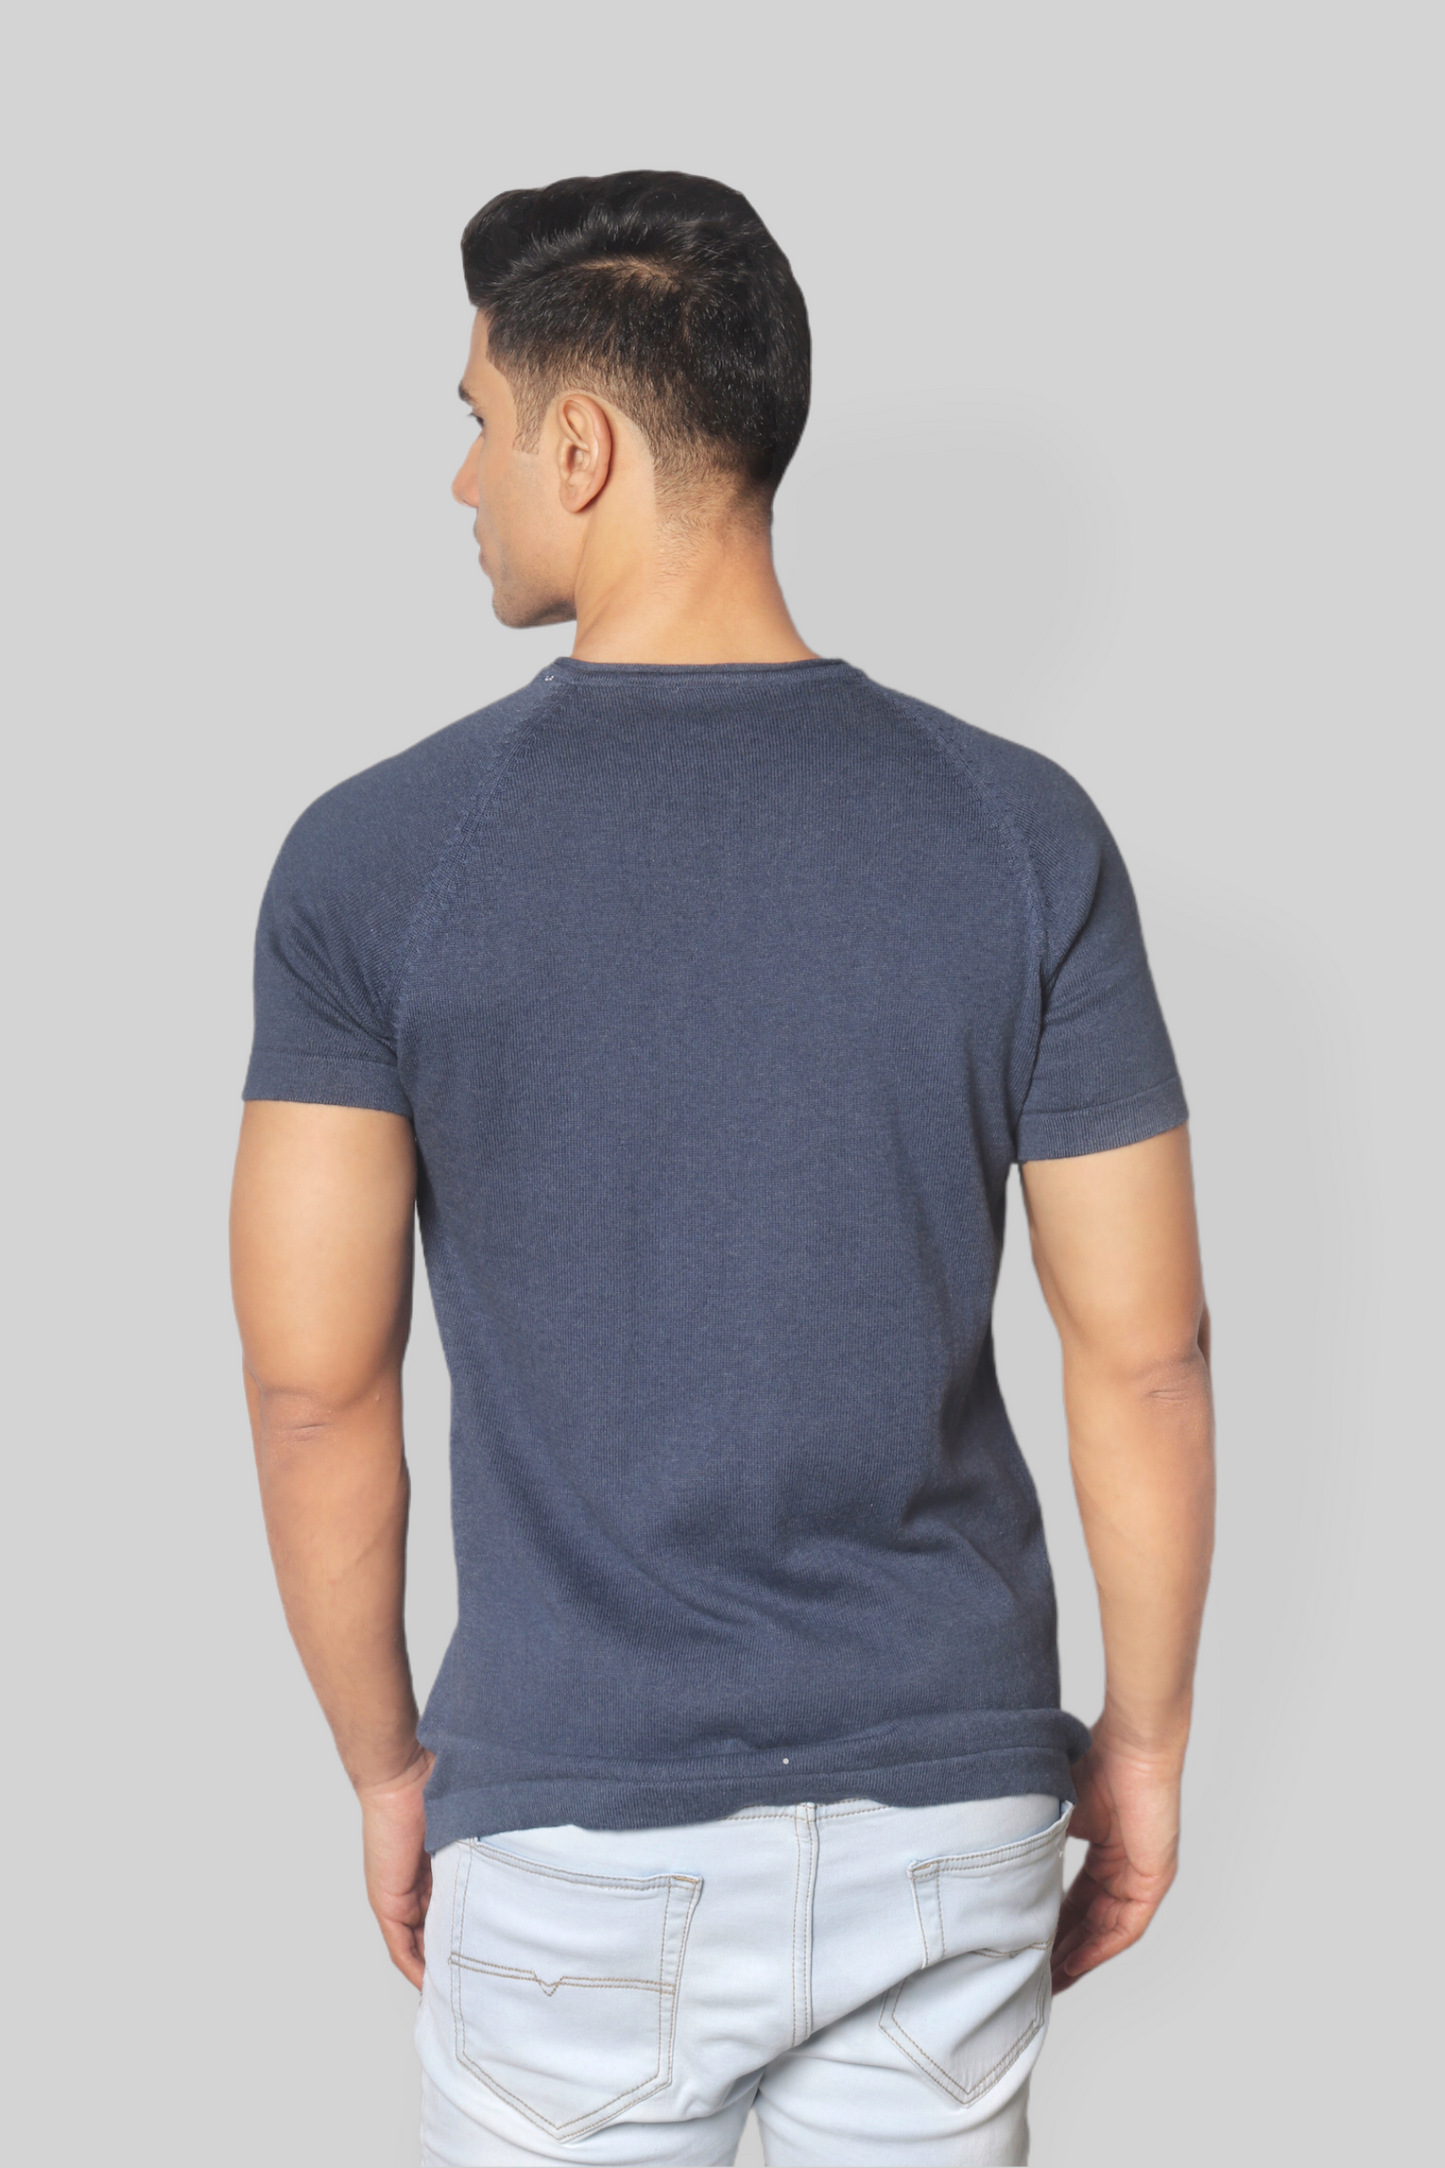 Airforce Blue Half Sleeve Flat Knit Rough neck T-Shirt for men